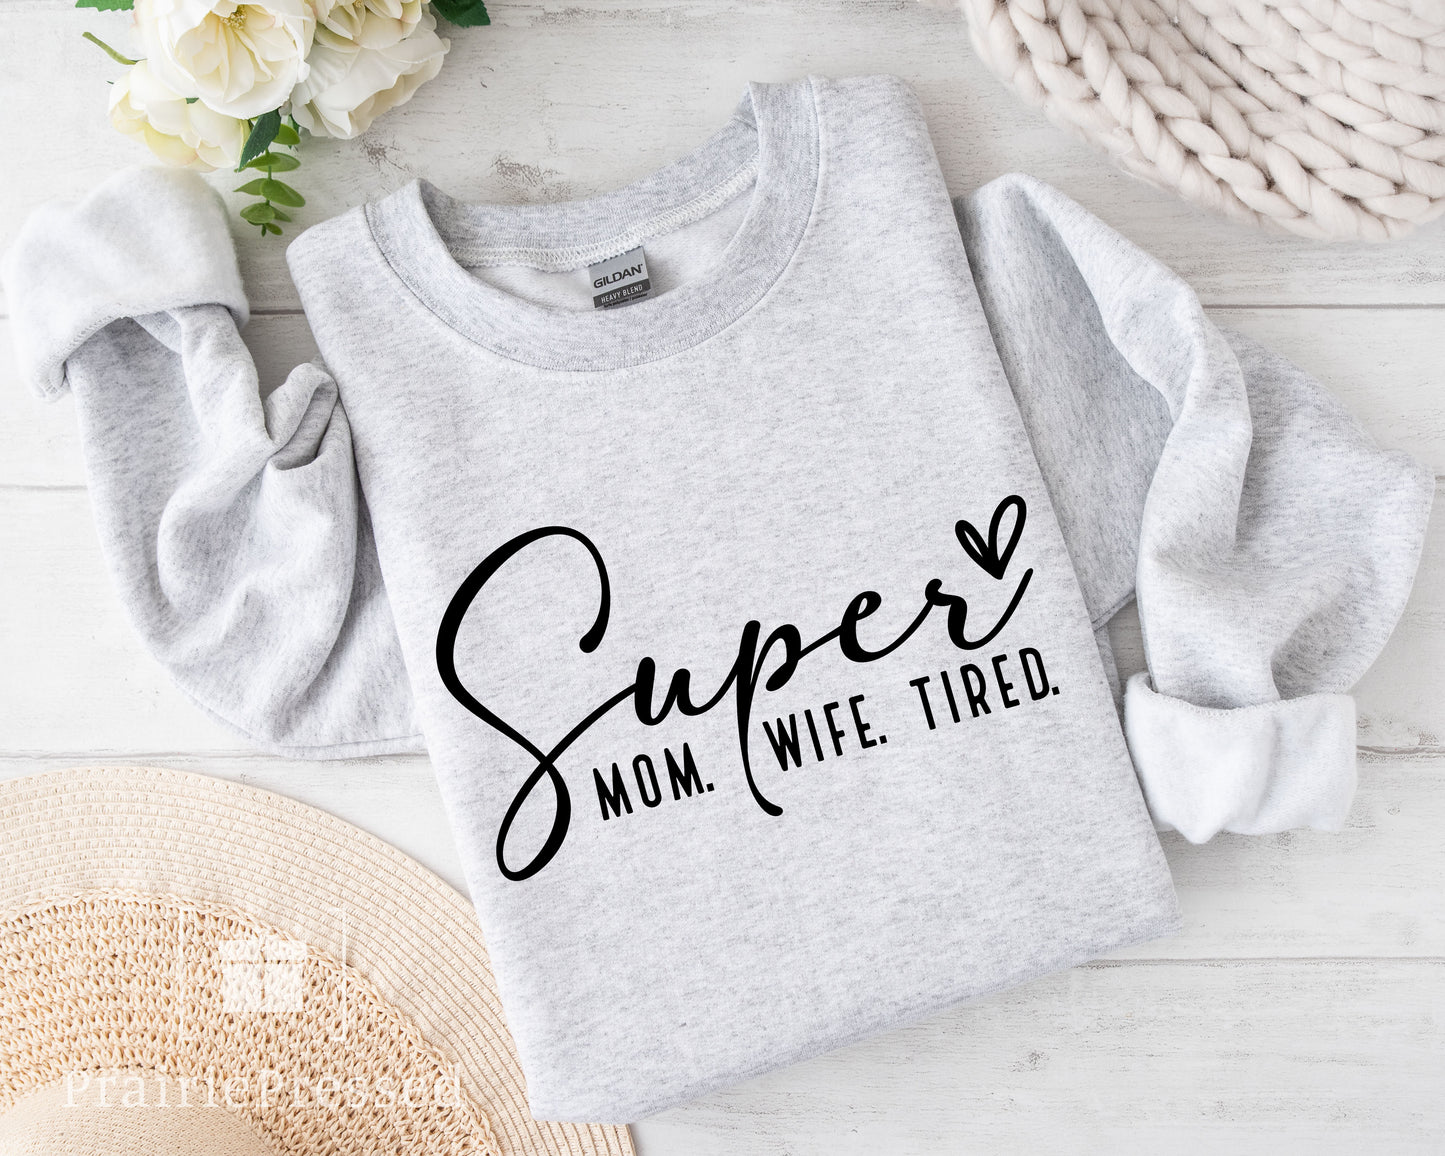 Super Mom Wife Tired Crewneck Sweatshirt